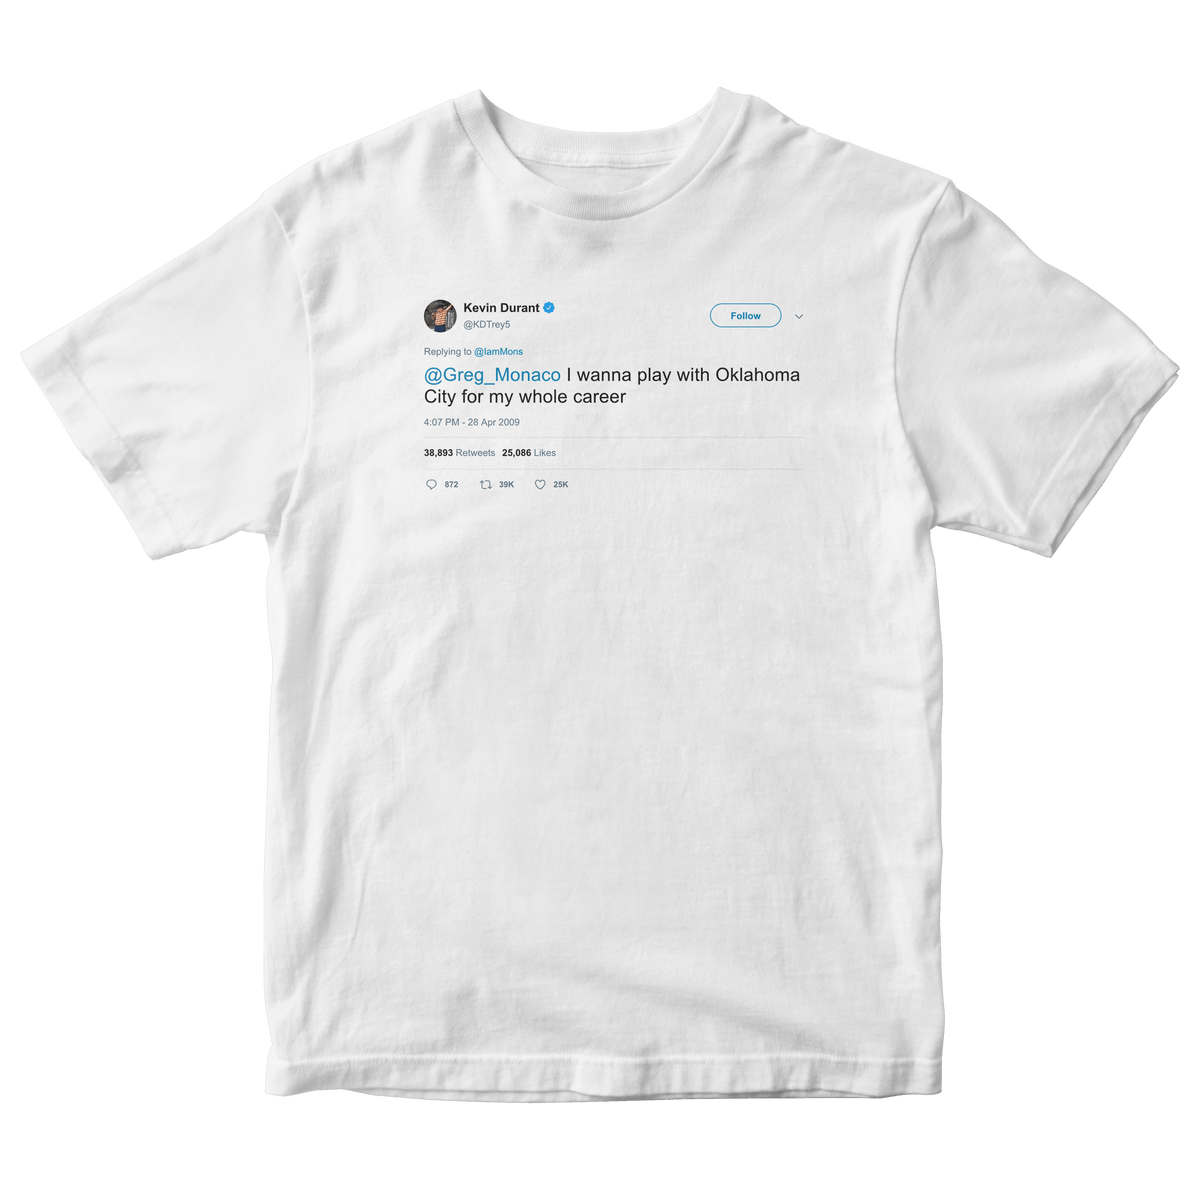 Kevin Durant - OKC My Whole Career tweet shirts